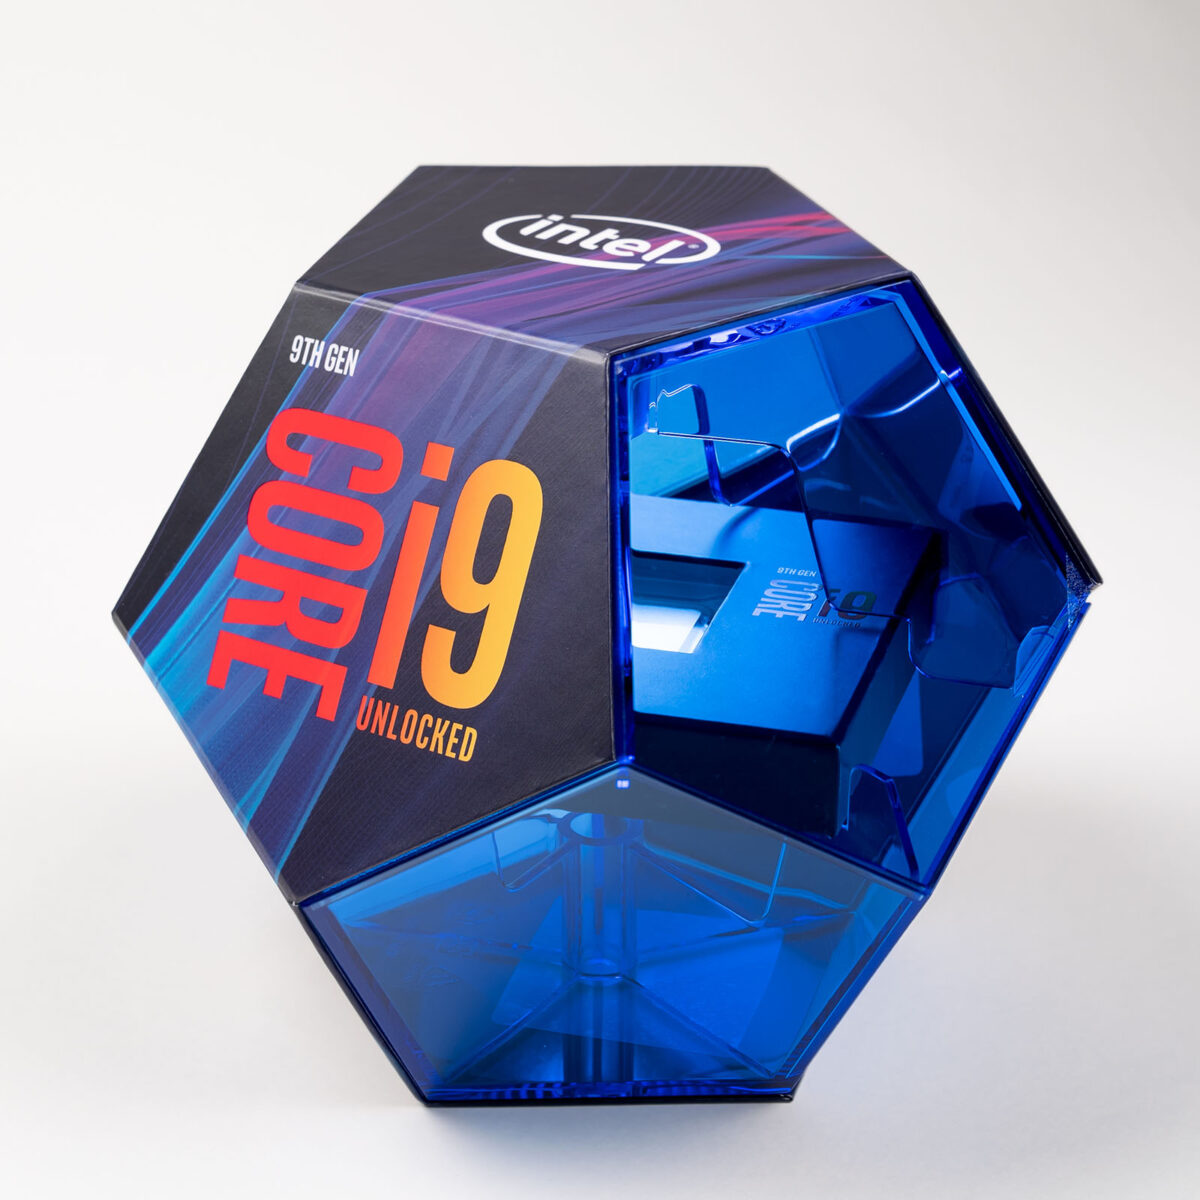 A Look At Intel Core i9-9900K Workstation & Gaming Performance – Techgage